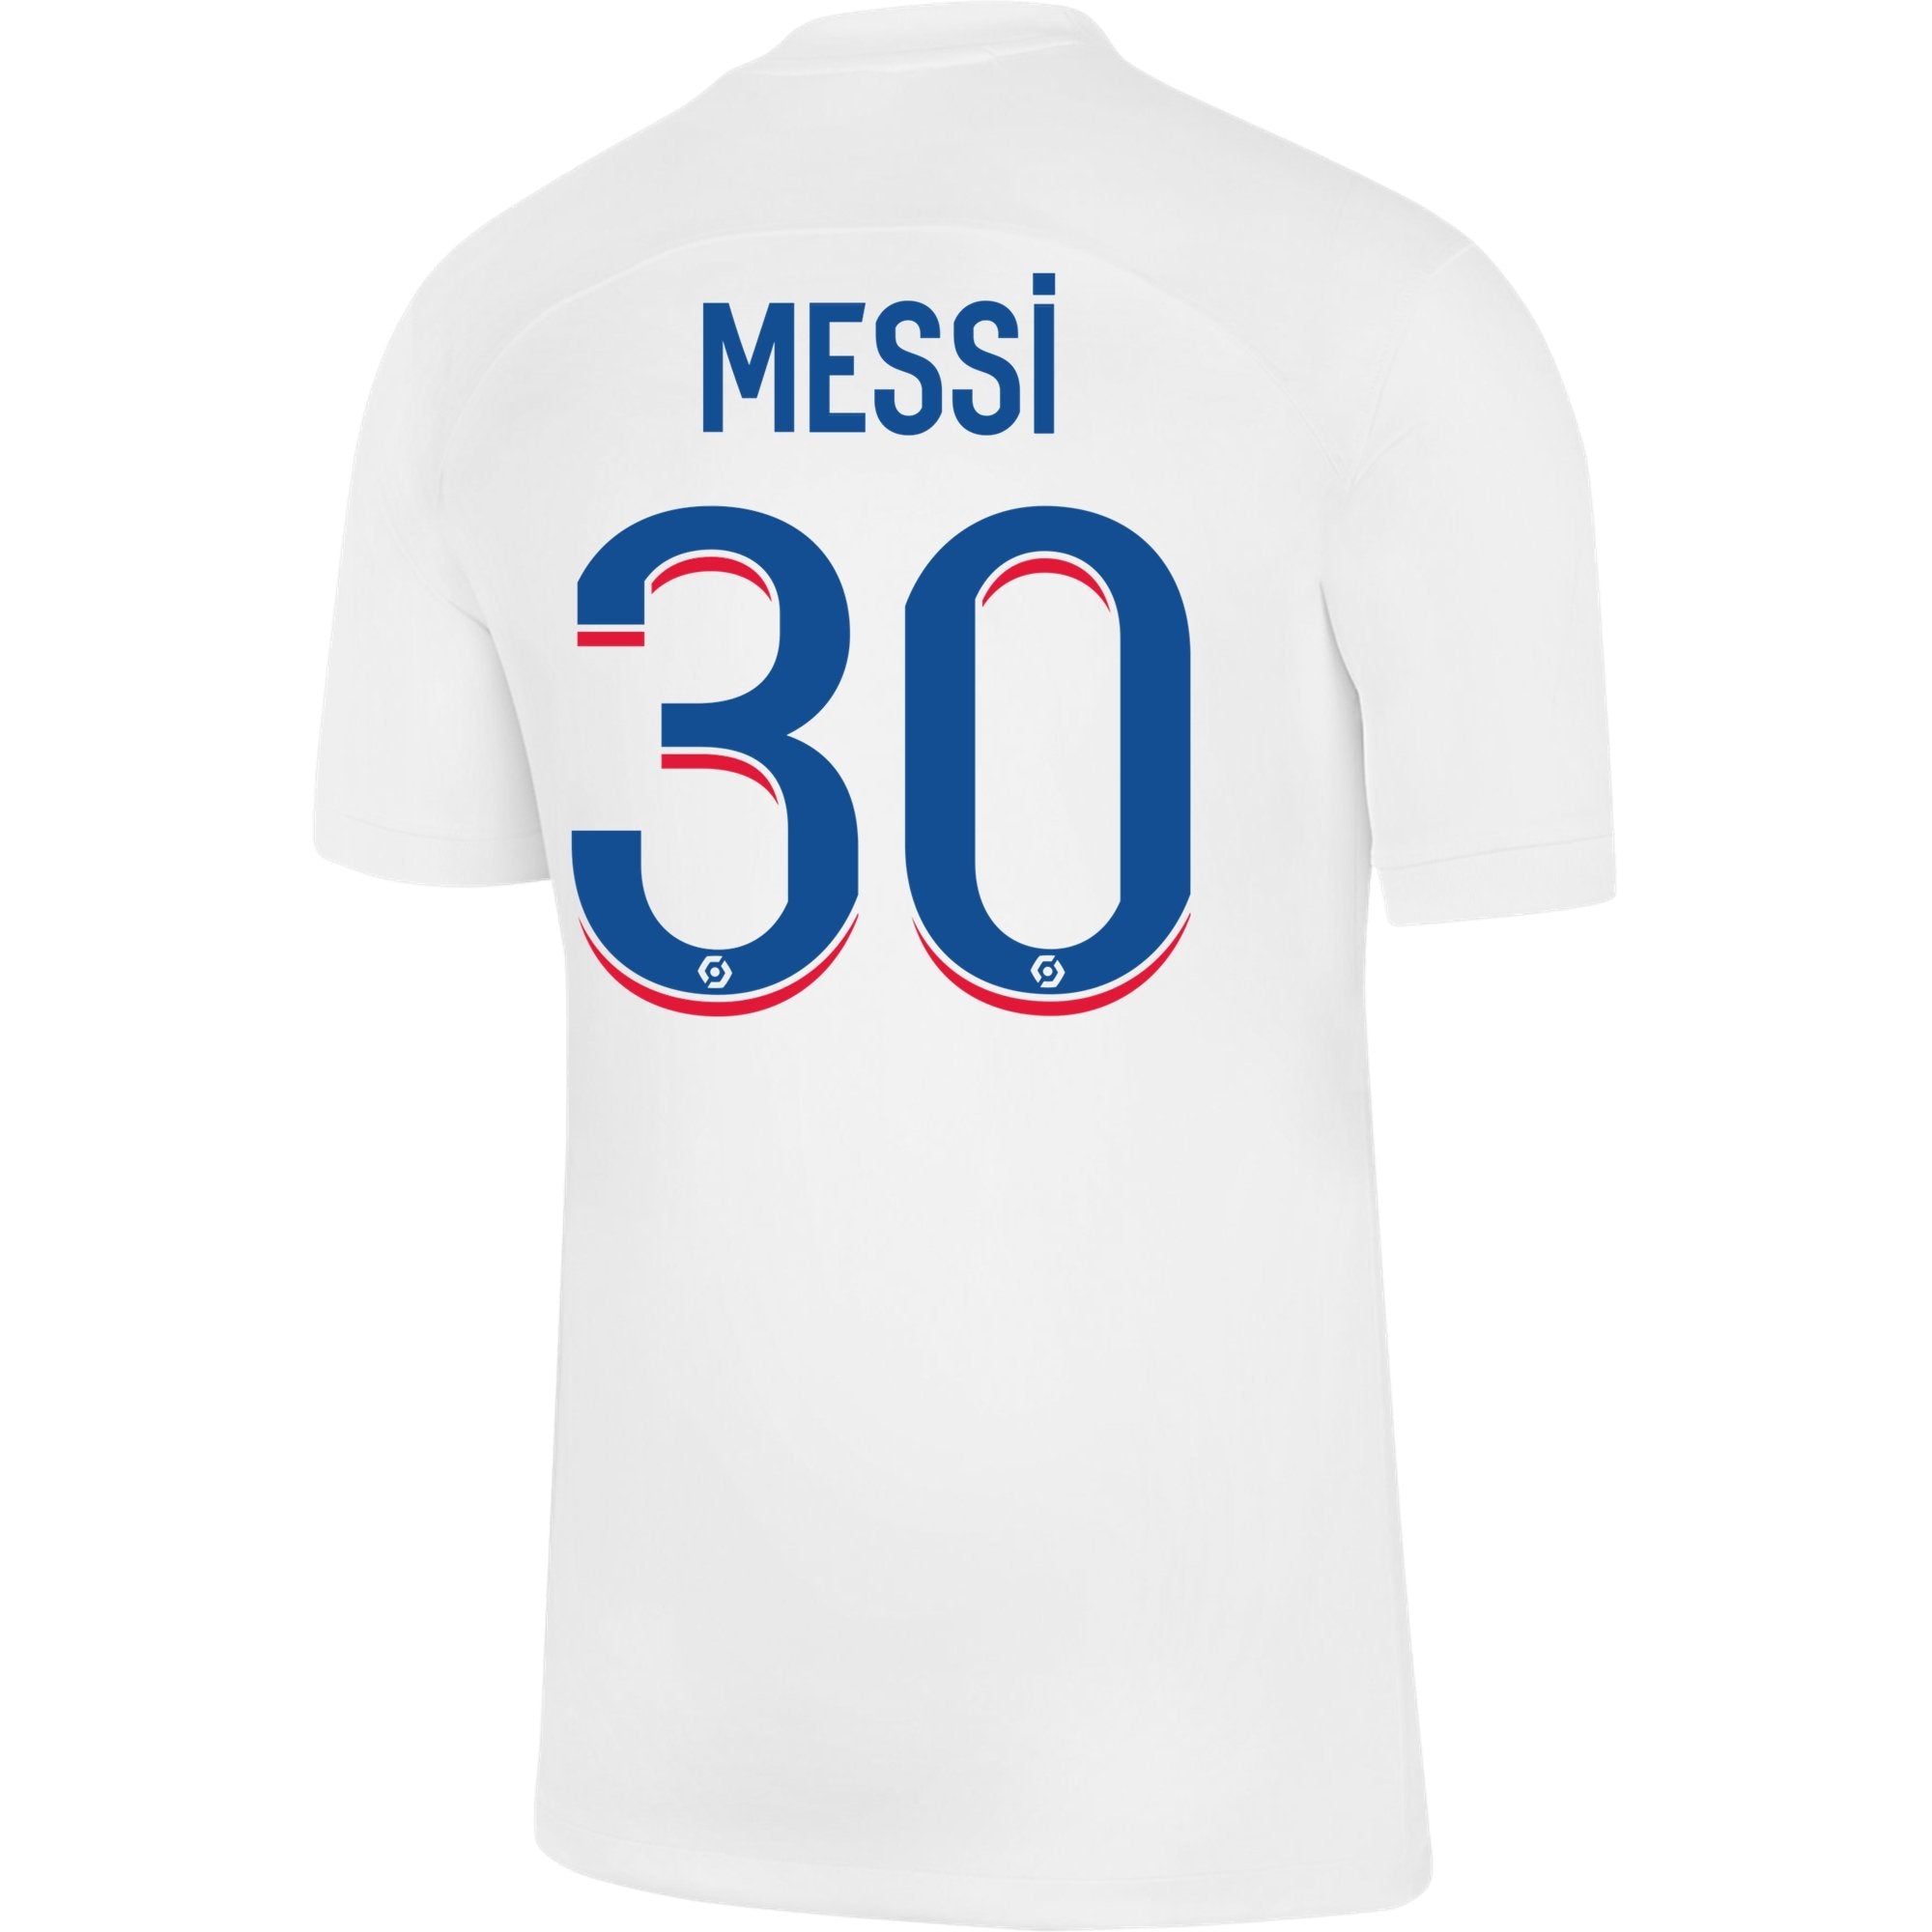 Messi PSG 21/22 Third Kids Kit by Nike - SoccerArmor 